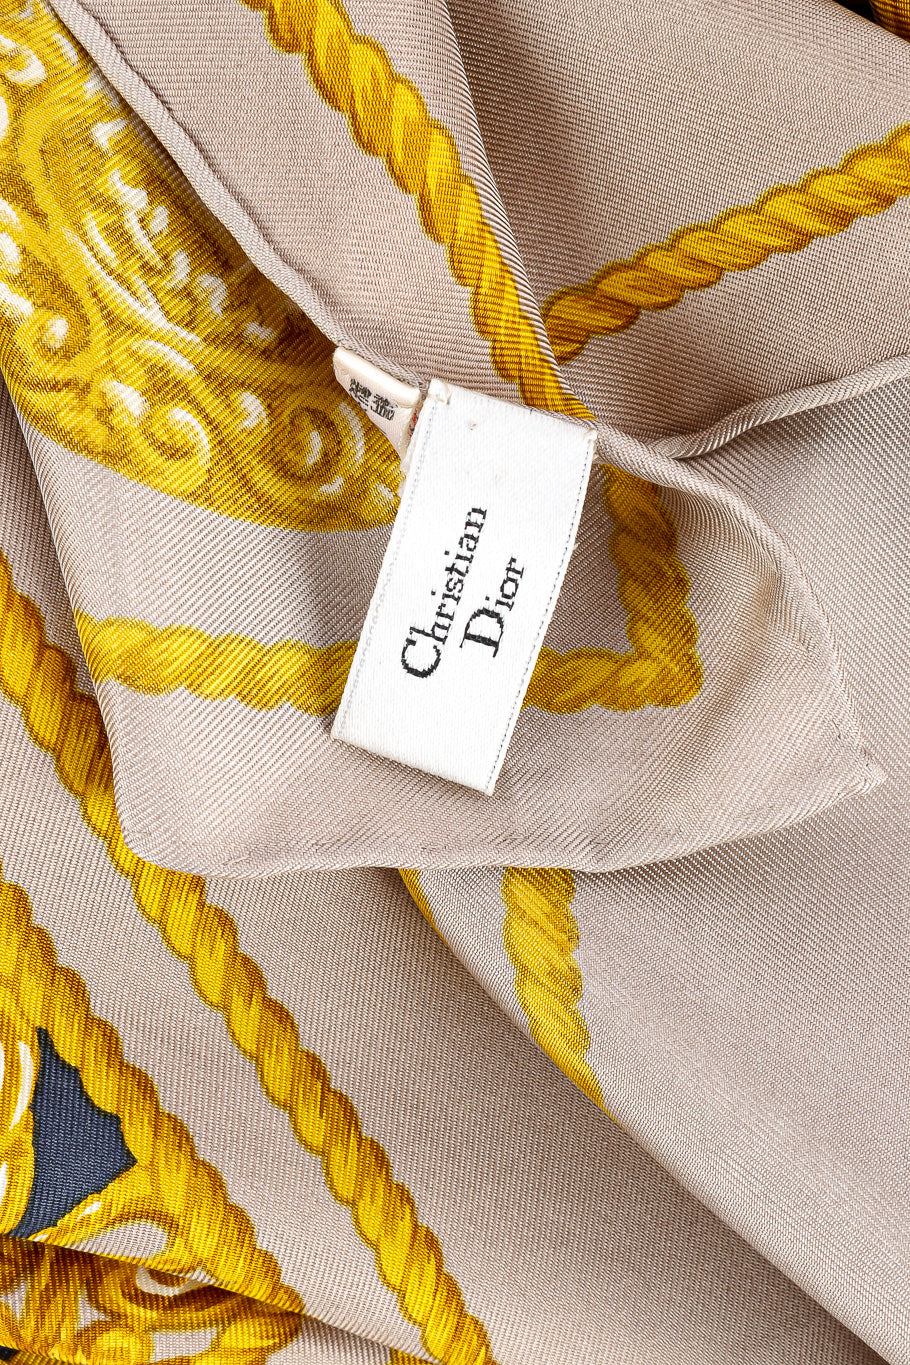 Brocade heart print scarf by Christian Dior label @recessla